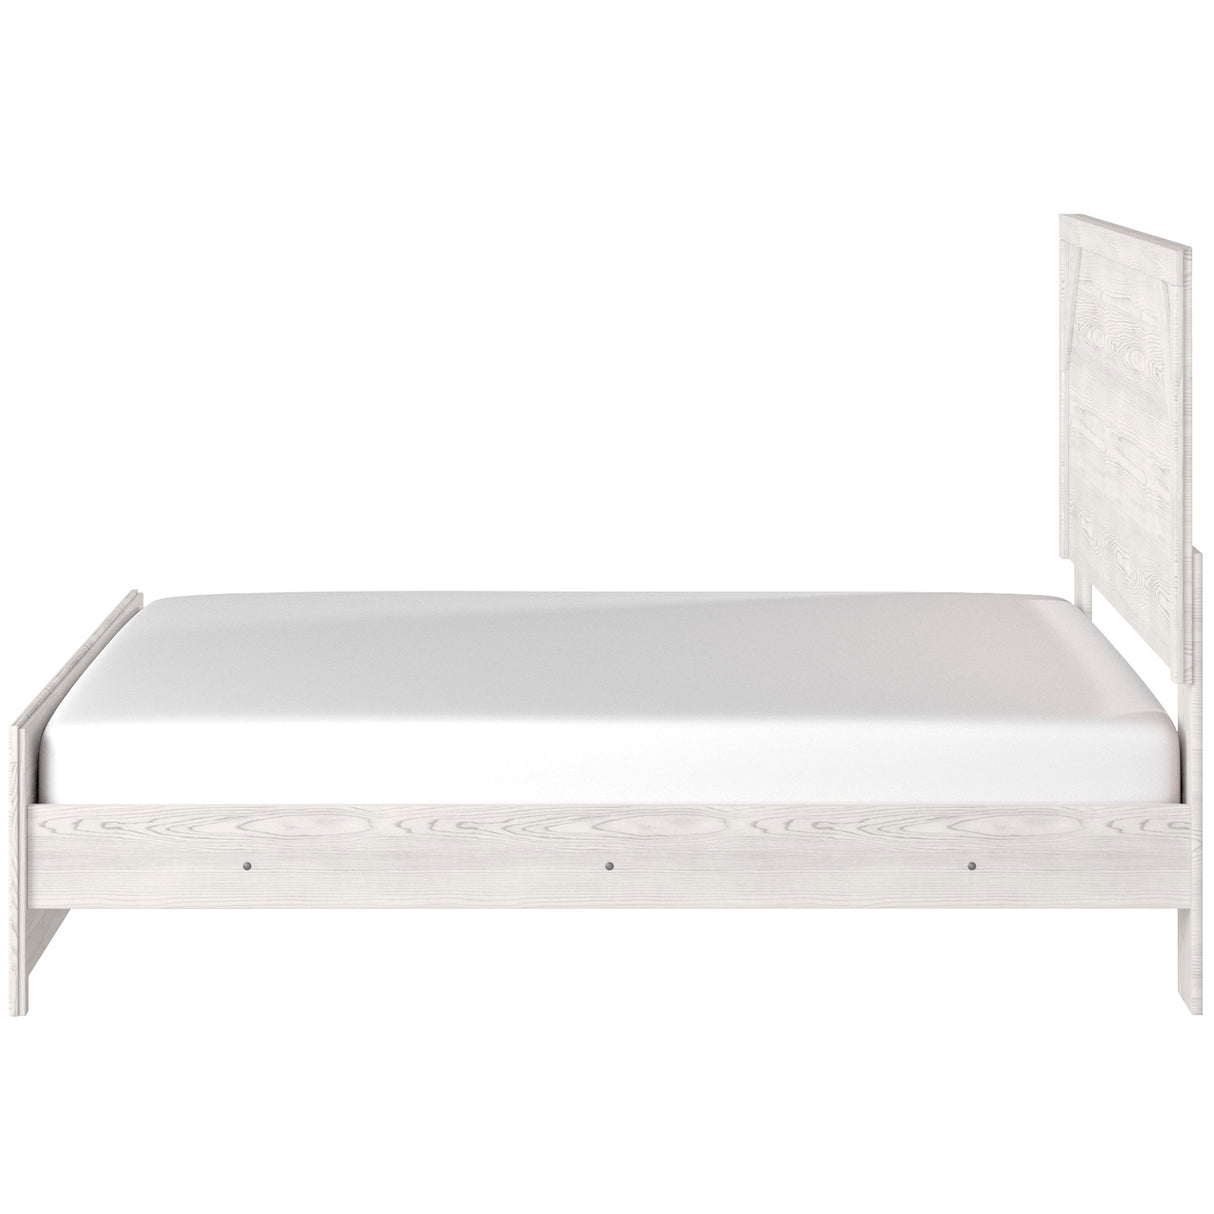 Gerridan White-Gray Panel Bedroom Set - Luna Furniture